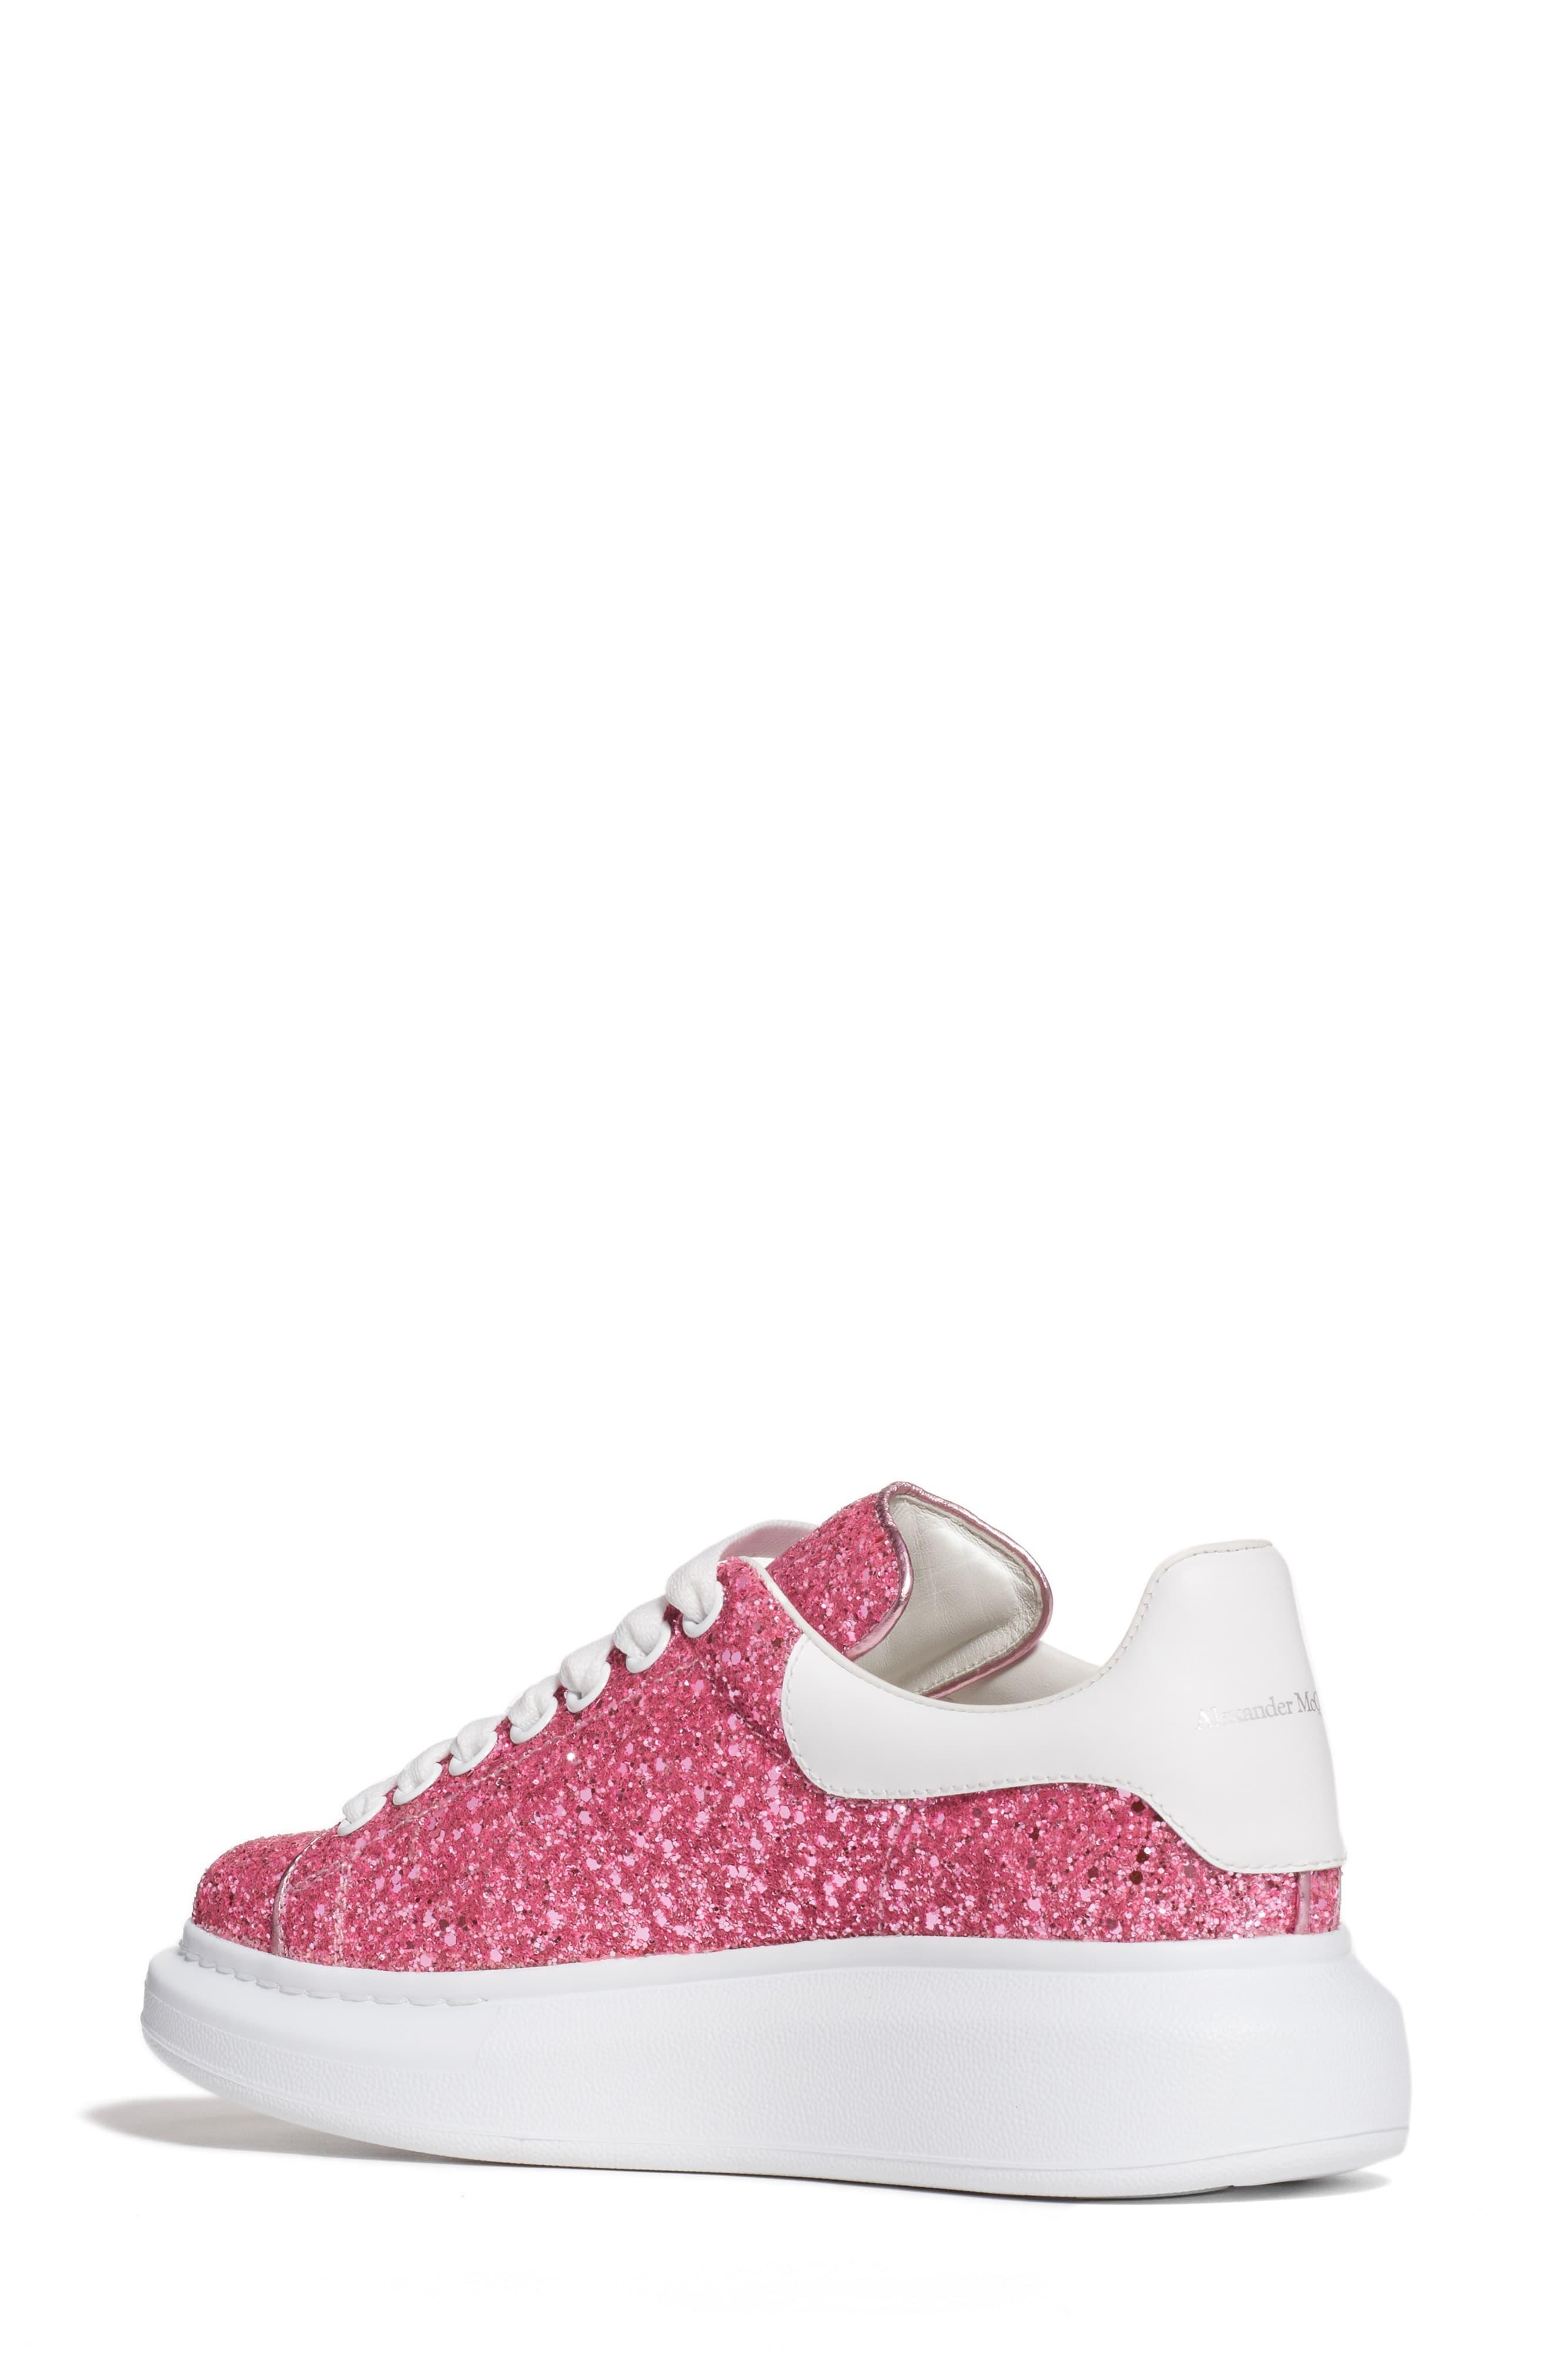 Alexander McQueen Lace Sneaker in Pink Glitter (Pink) - Save 45% - Lyst